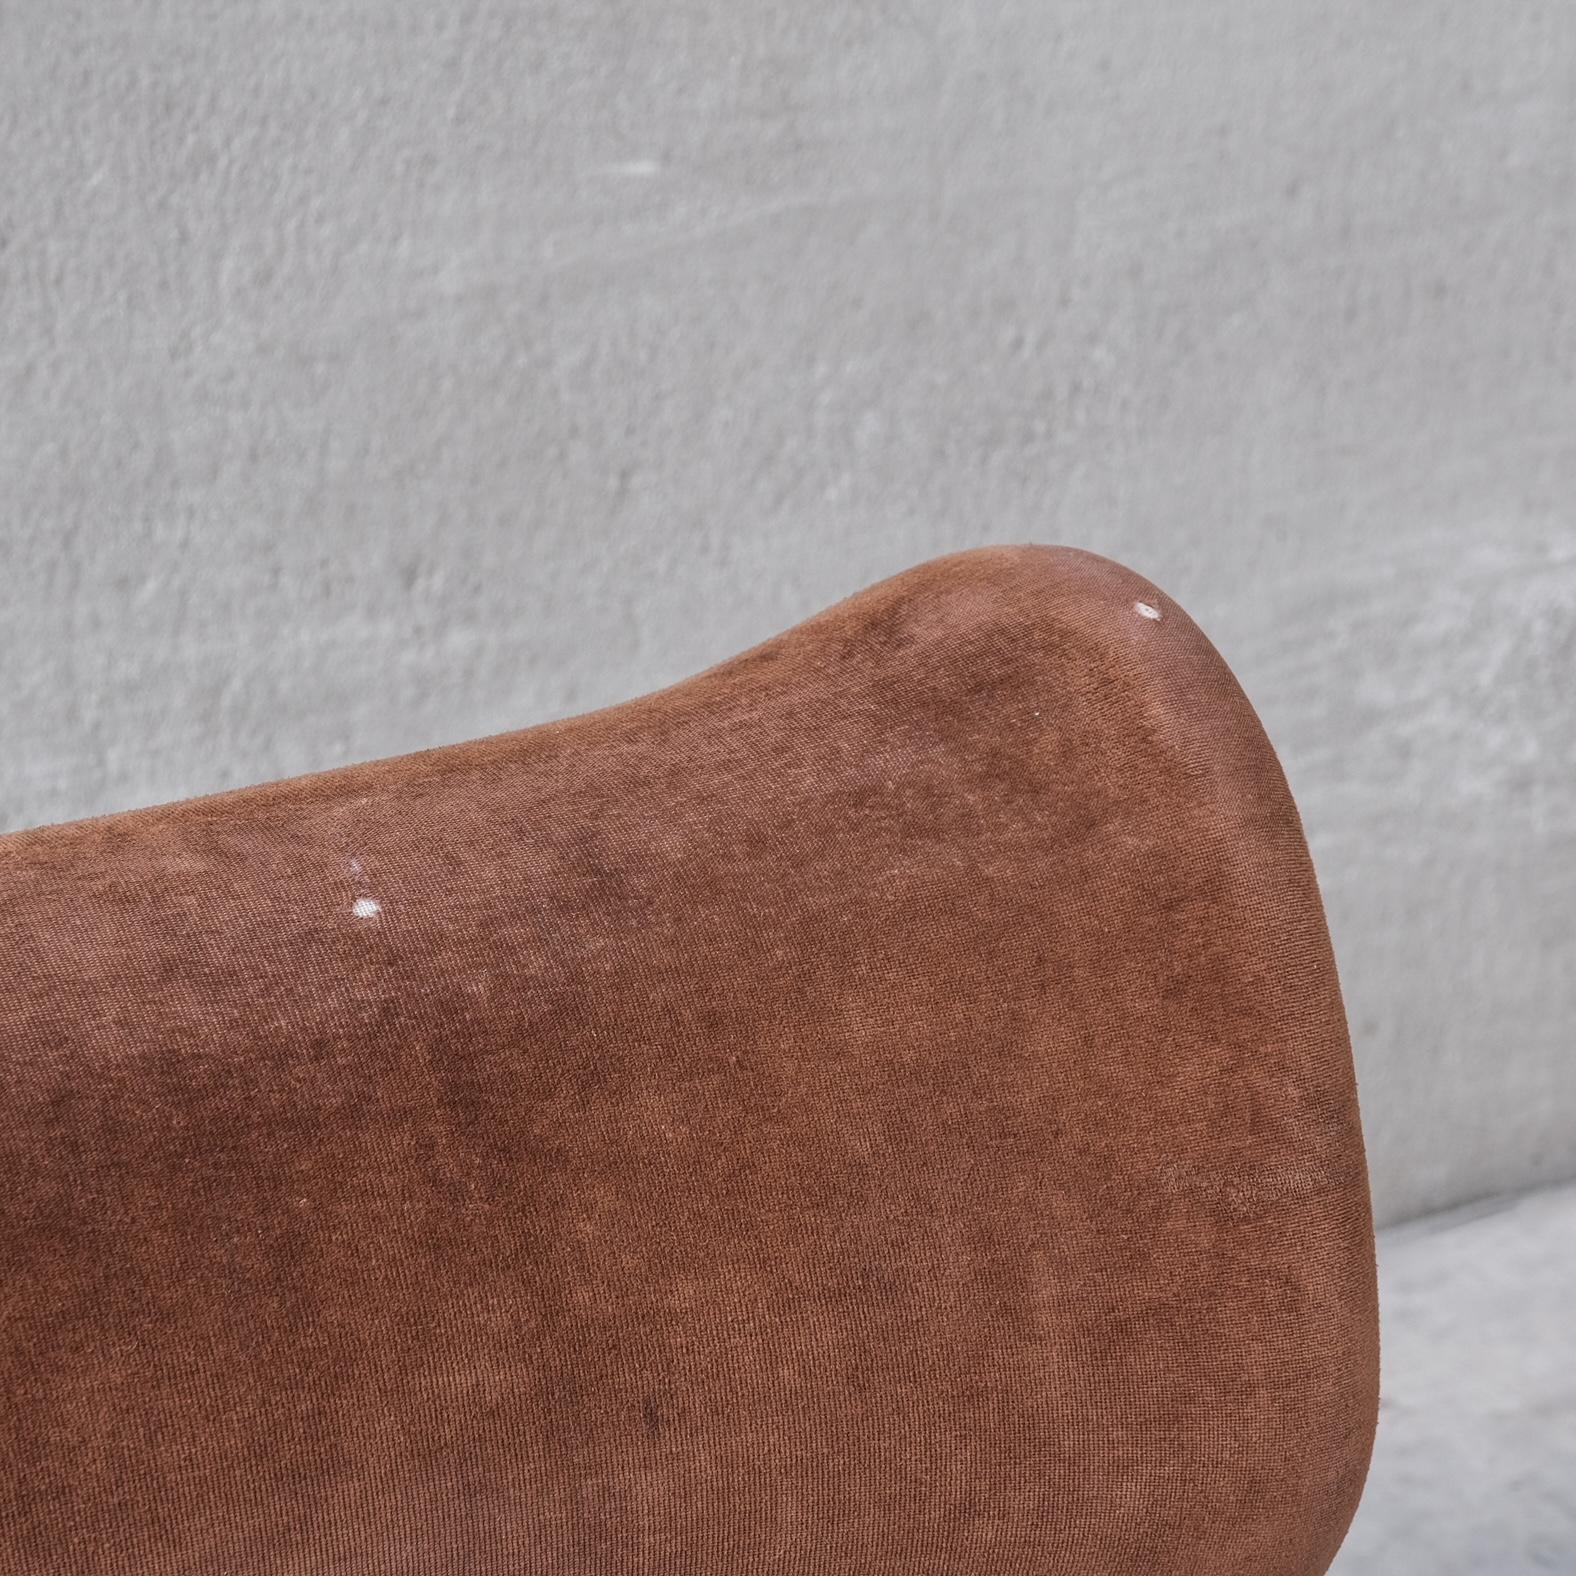 Jans Ekselius 'Etcetera' Midcentury Lounge Chair '3 Available' 6